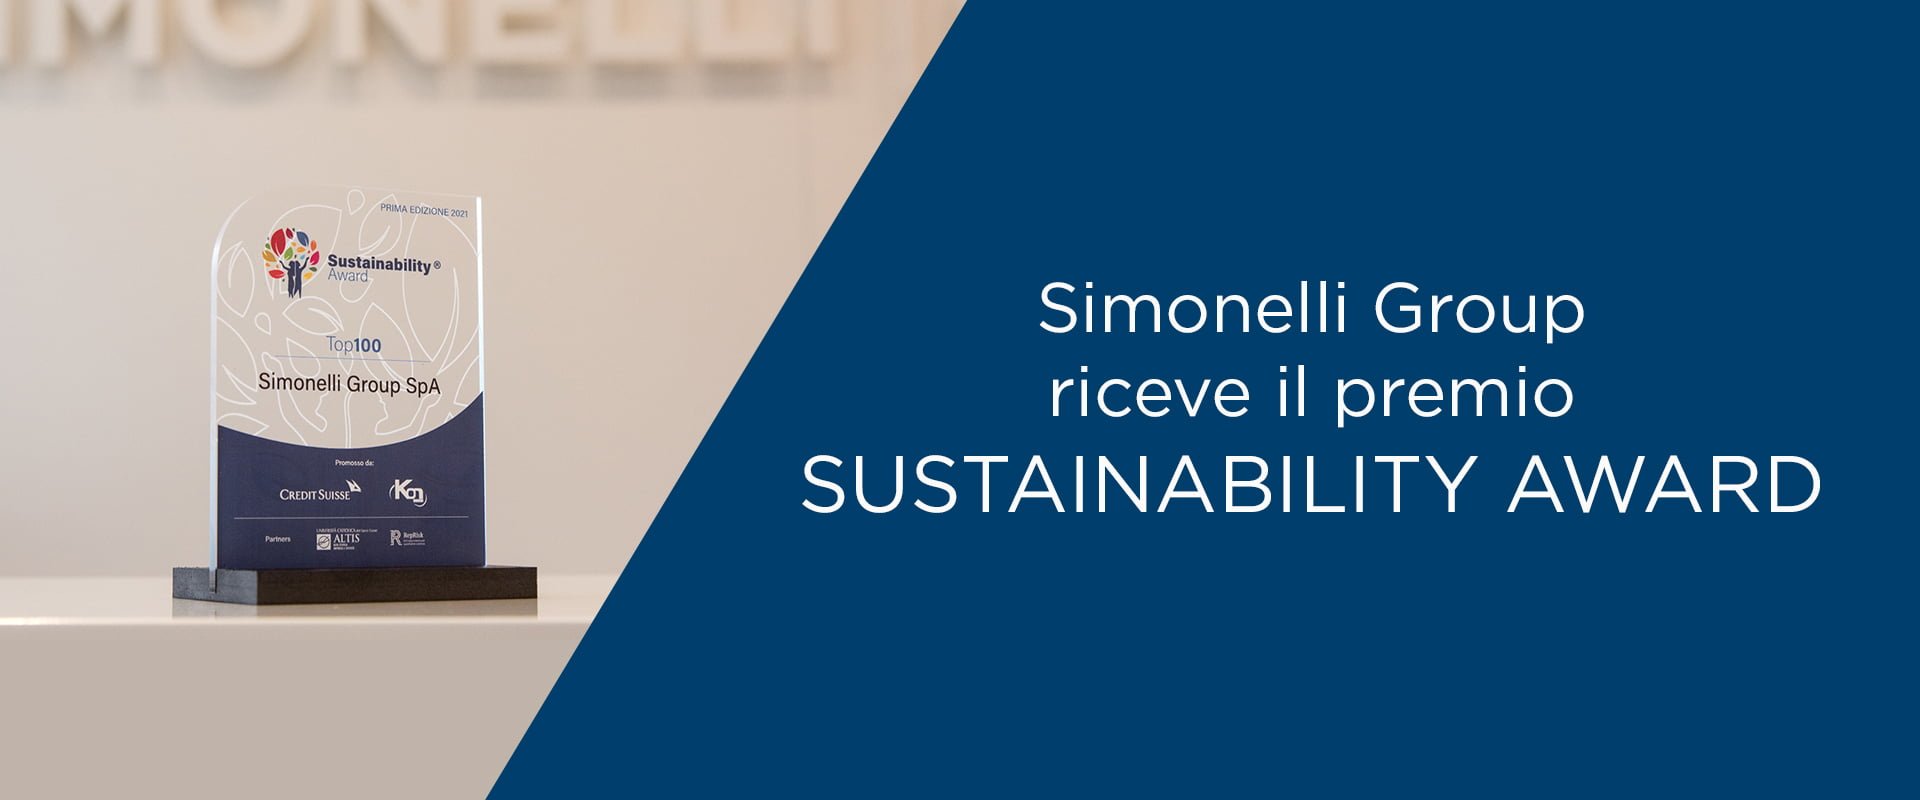 sustainability award simonelli